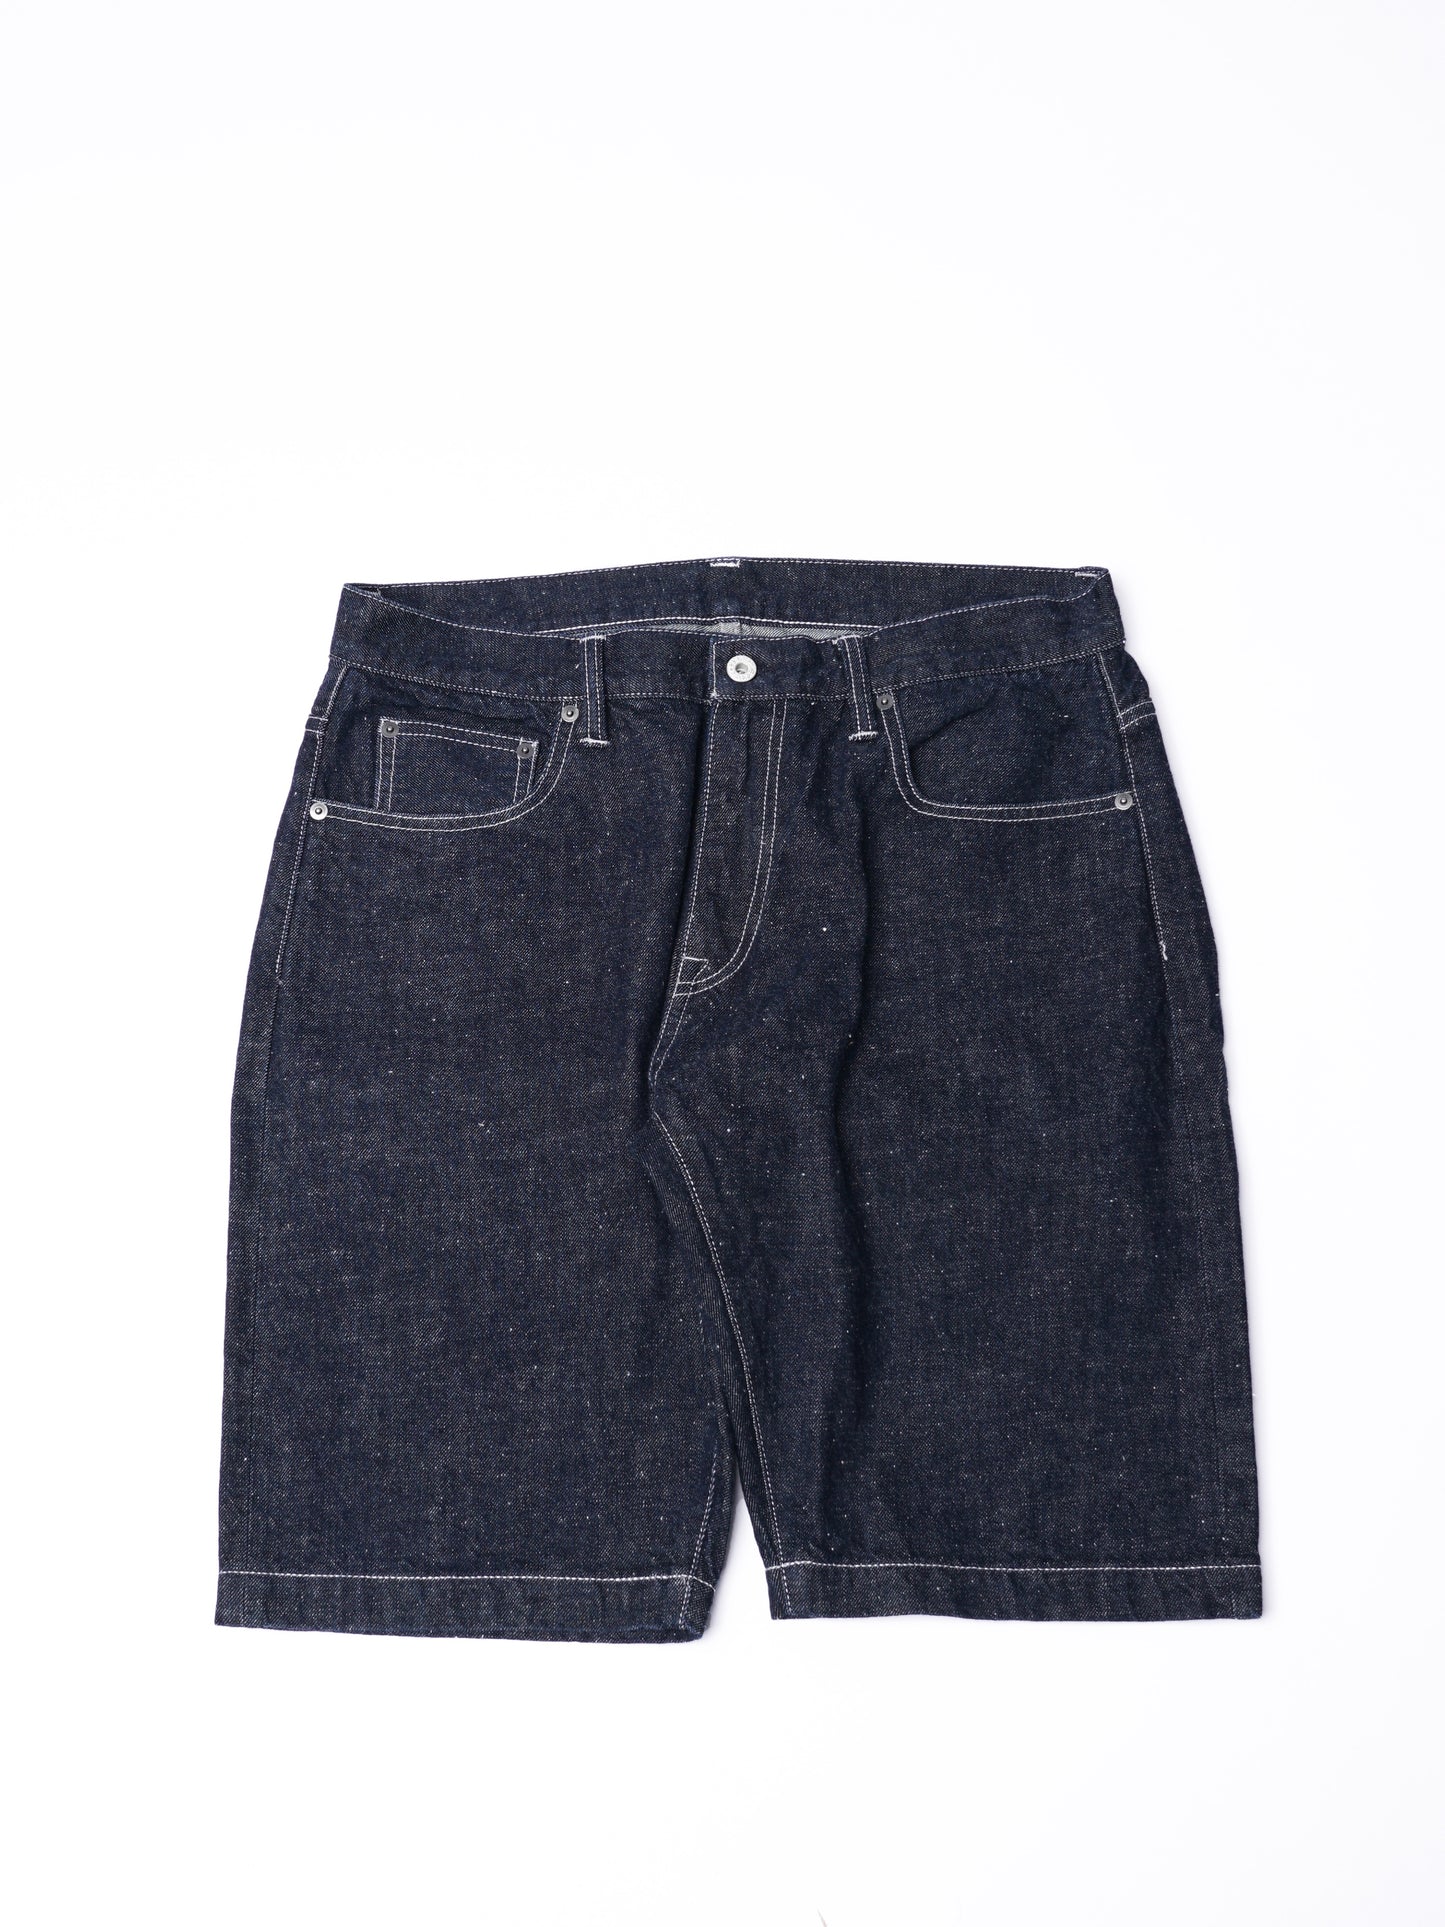 【Custom】14oz. Raw Woven Cotton Shorts Jeans